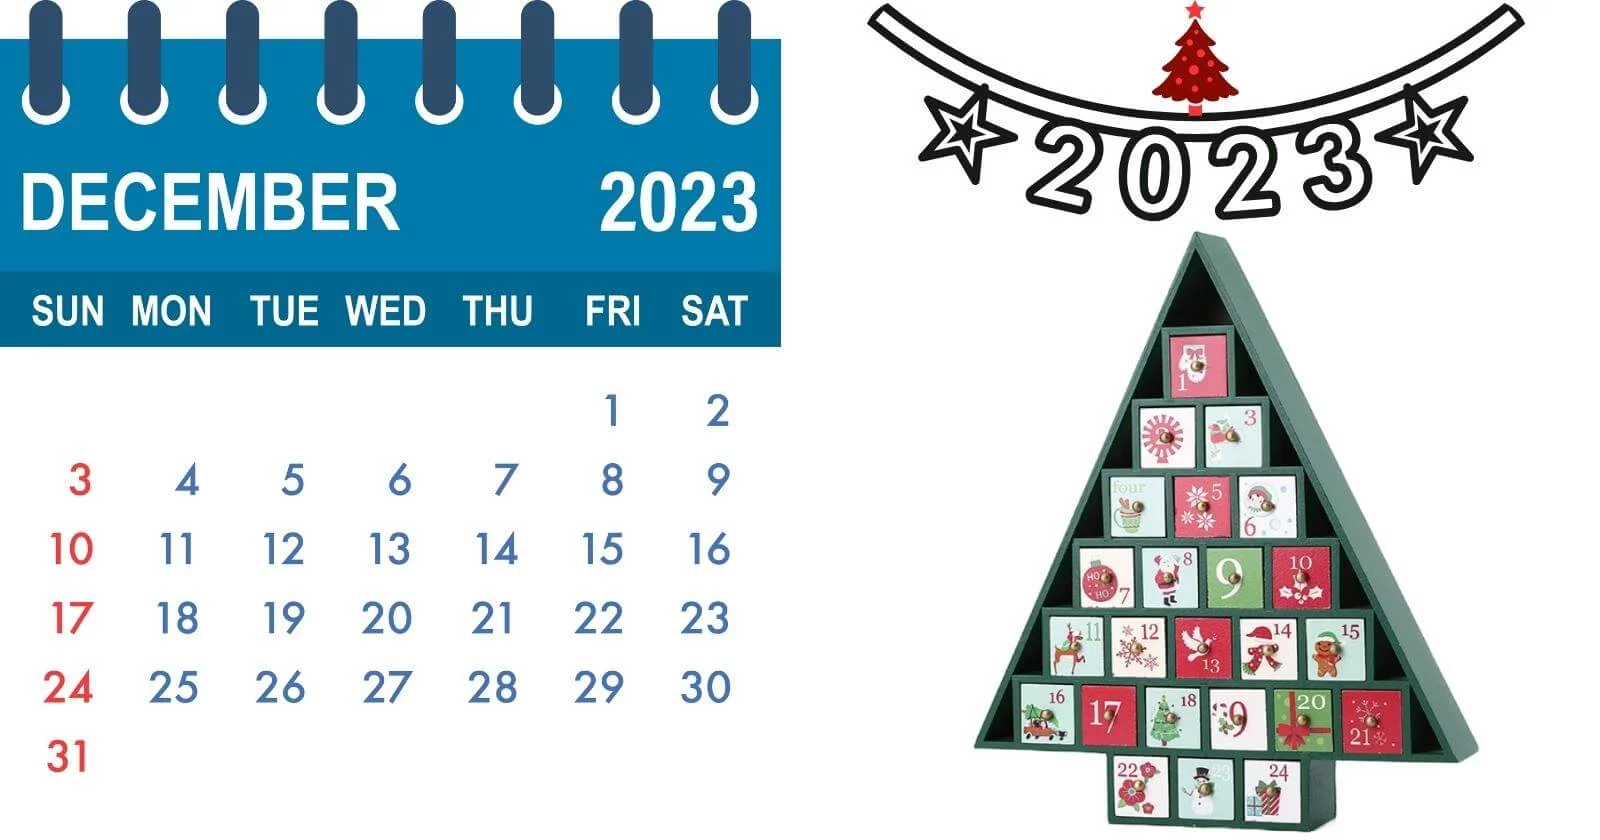 Free Download December 2023 Calendars